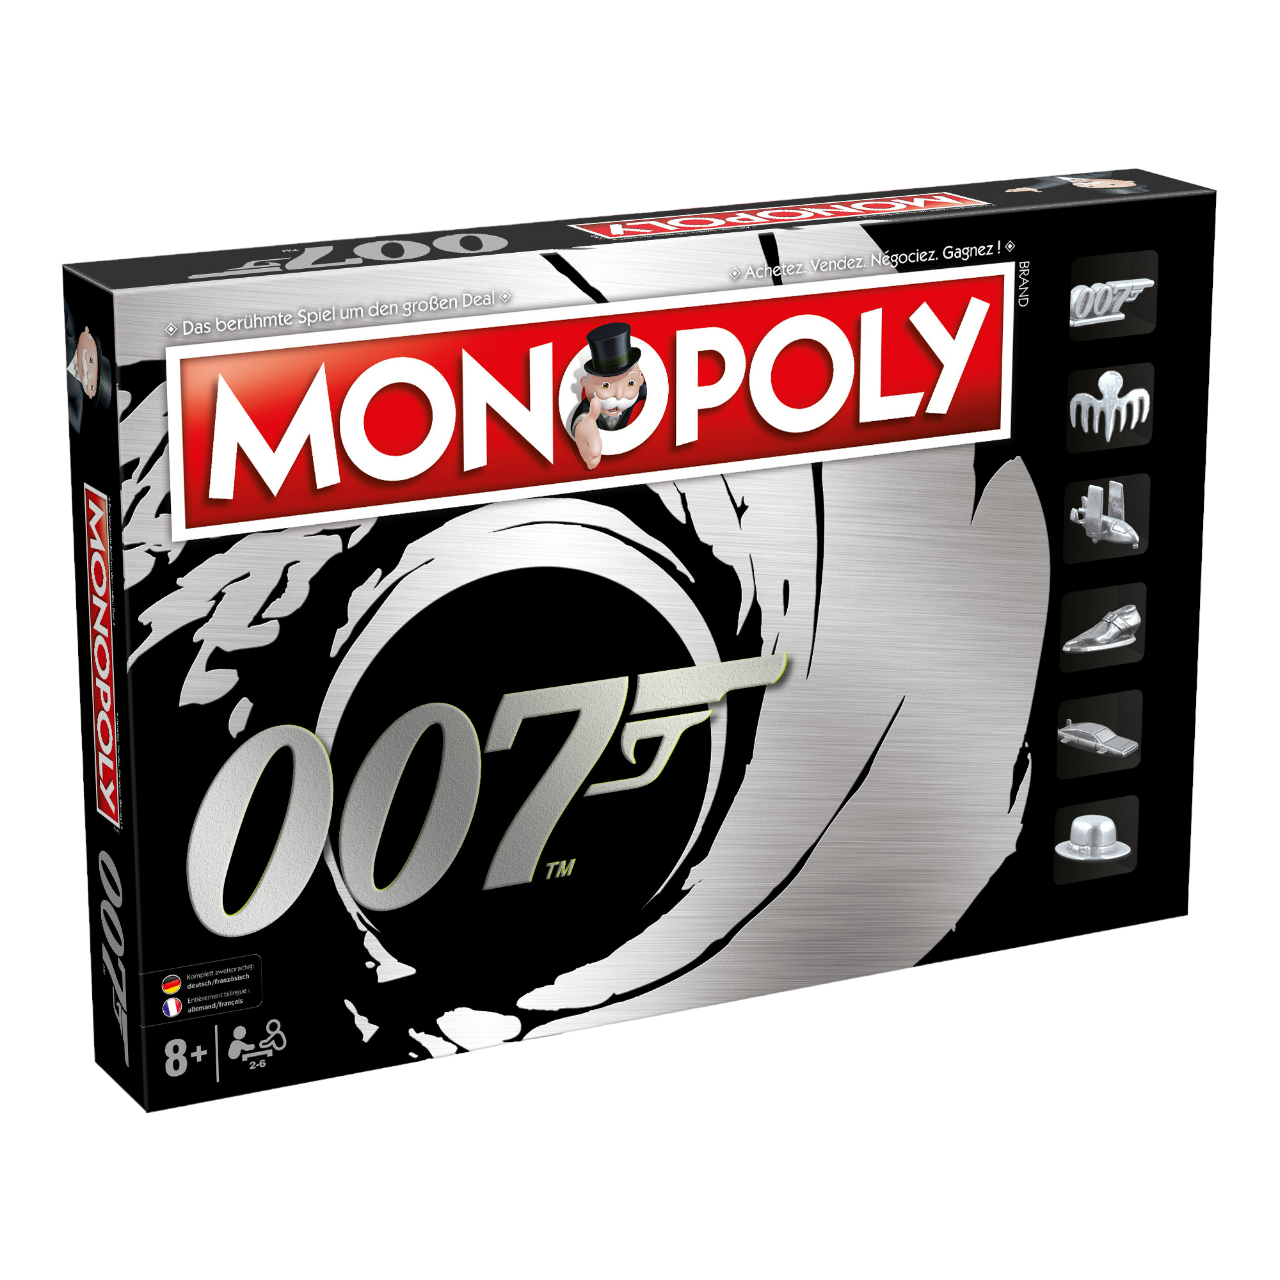 Bond Monopoly James